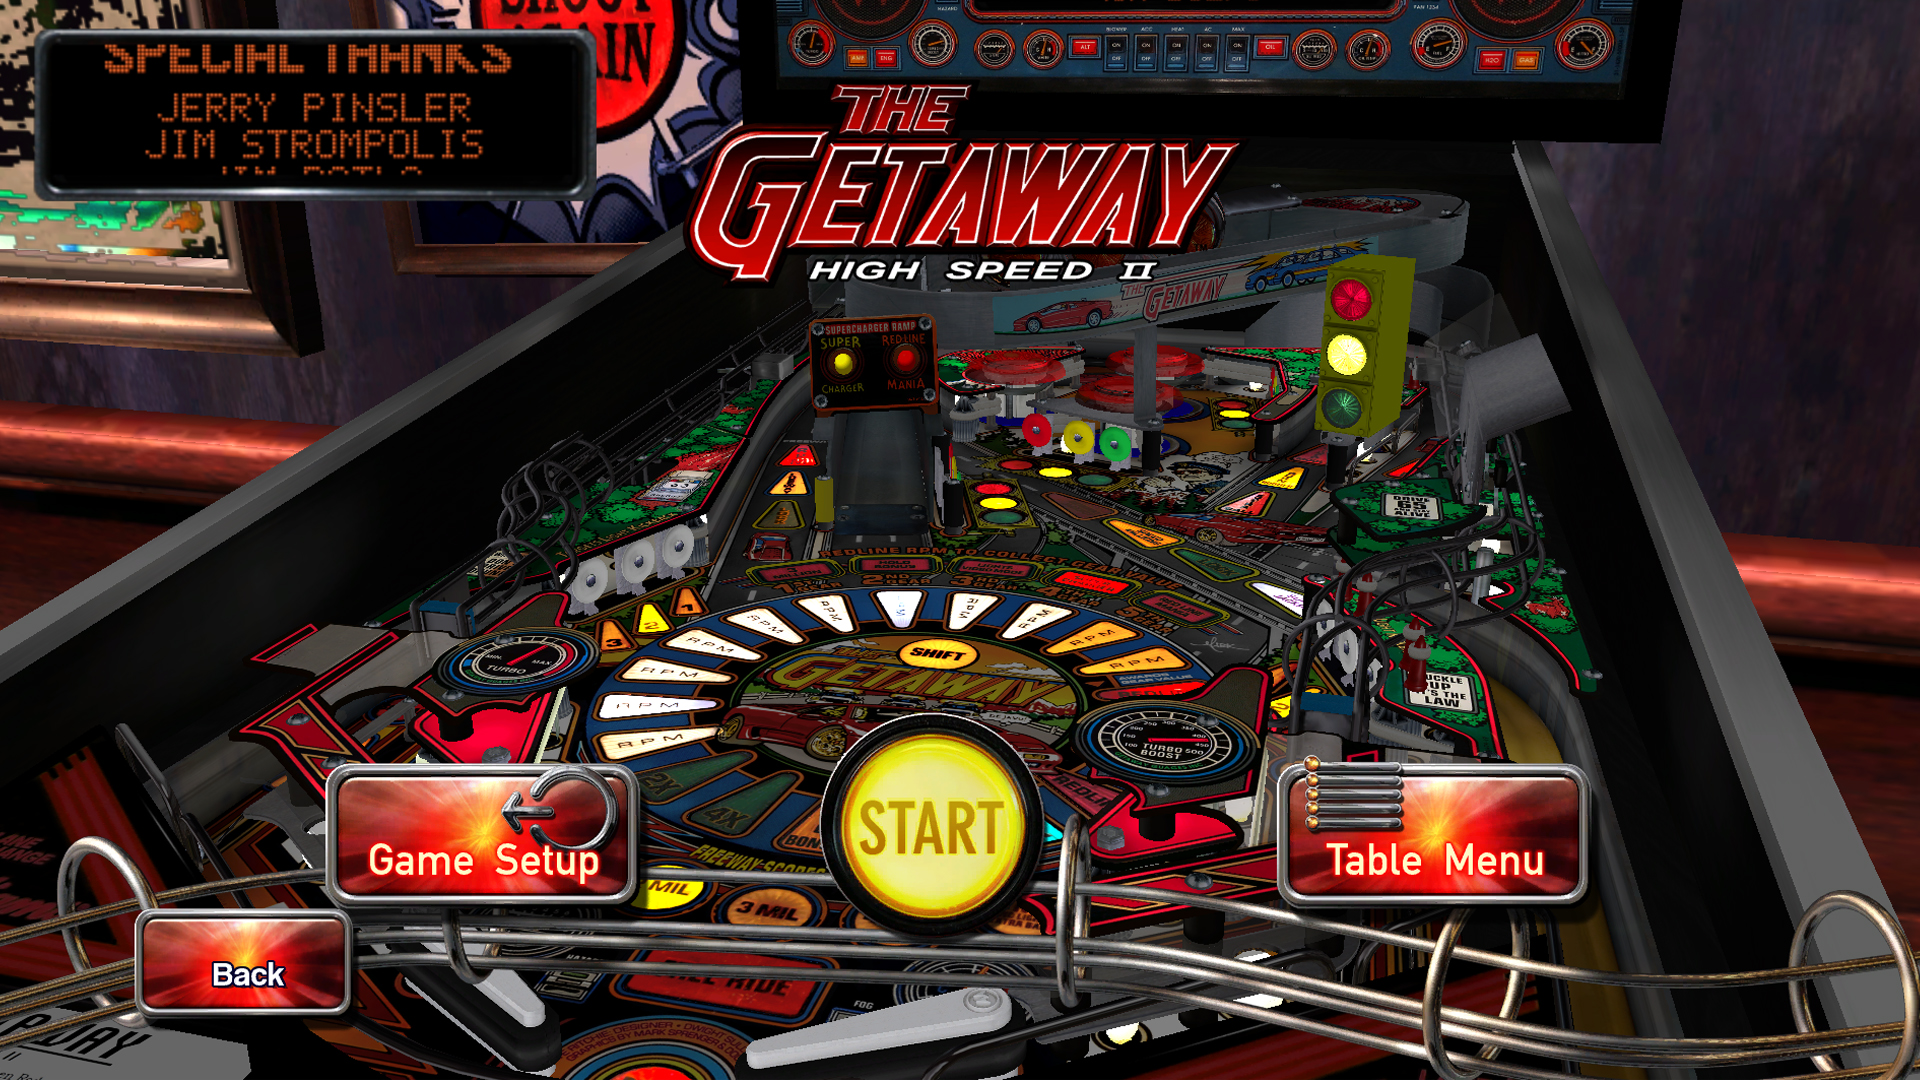 Pinball Arcade: Season Five Pack Featured Screenshot #1